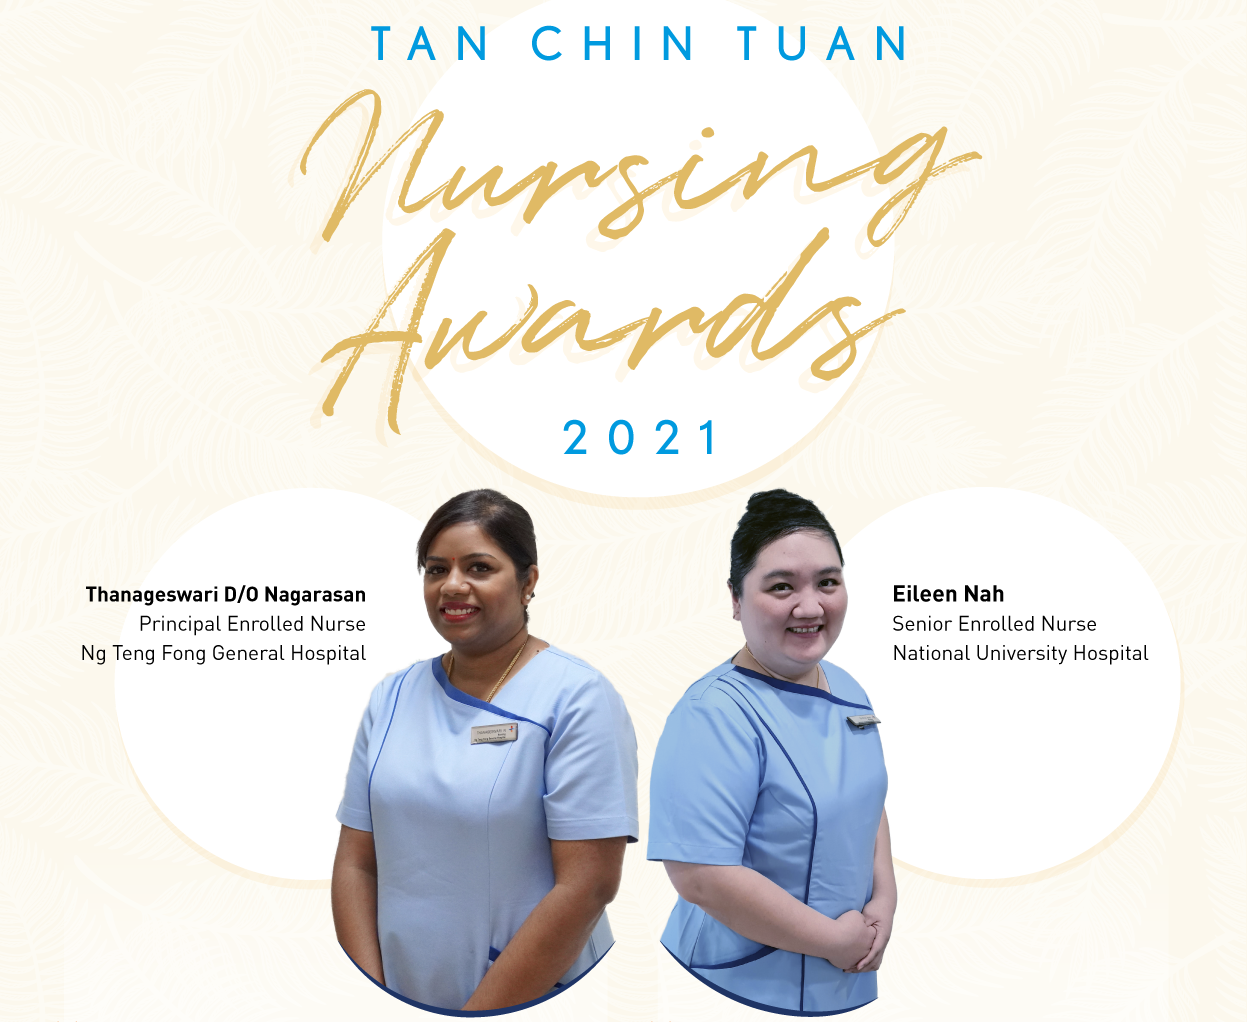 Tan Chin Tuan Nursing Awards 2021